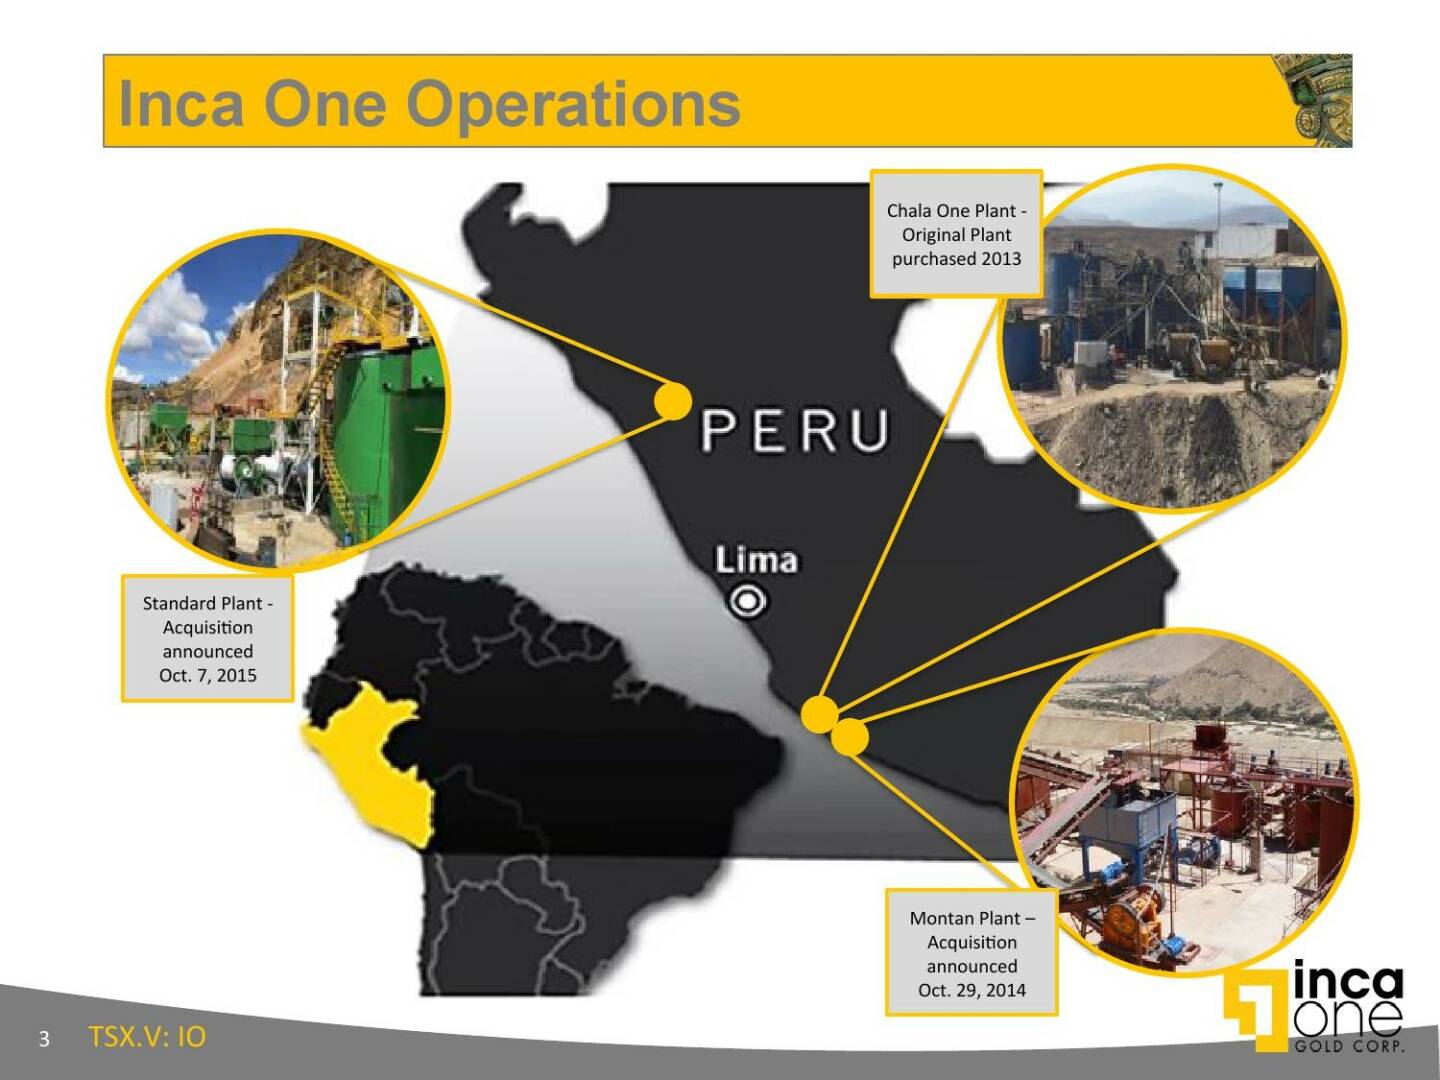 Inca One Operations